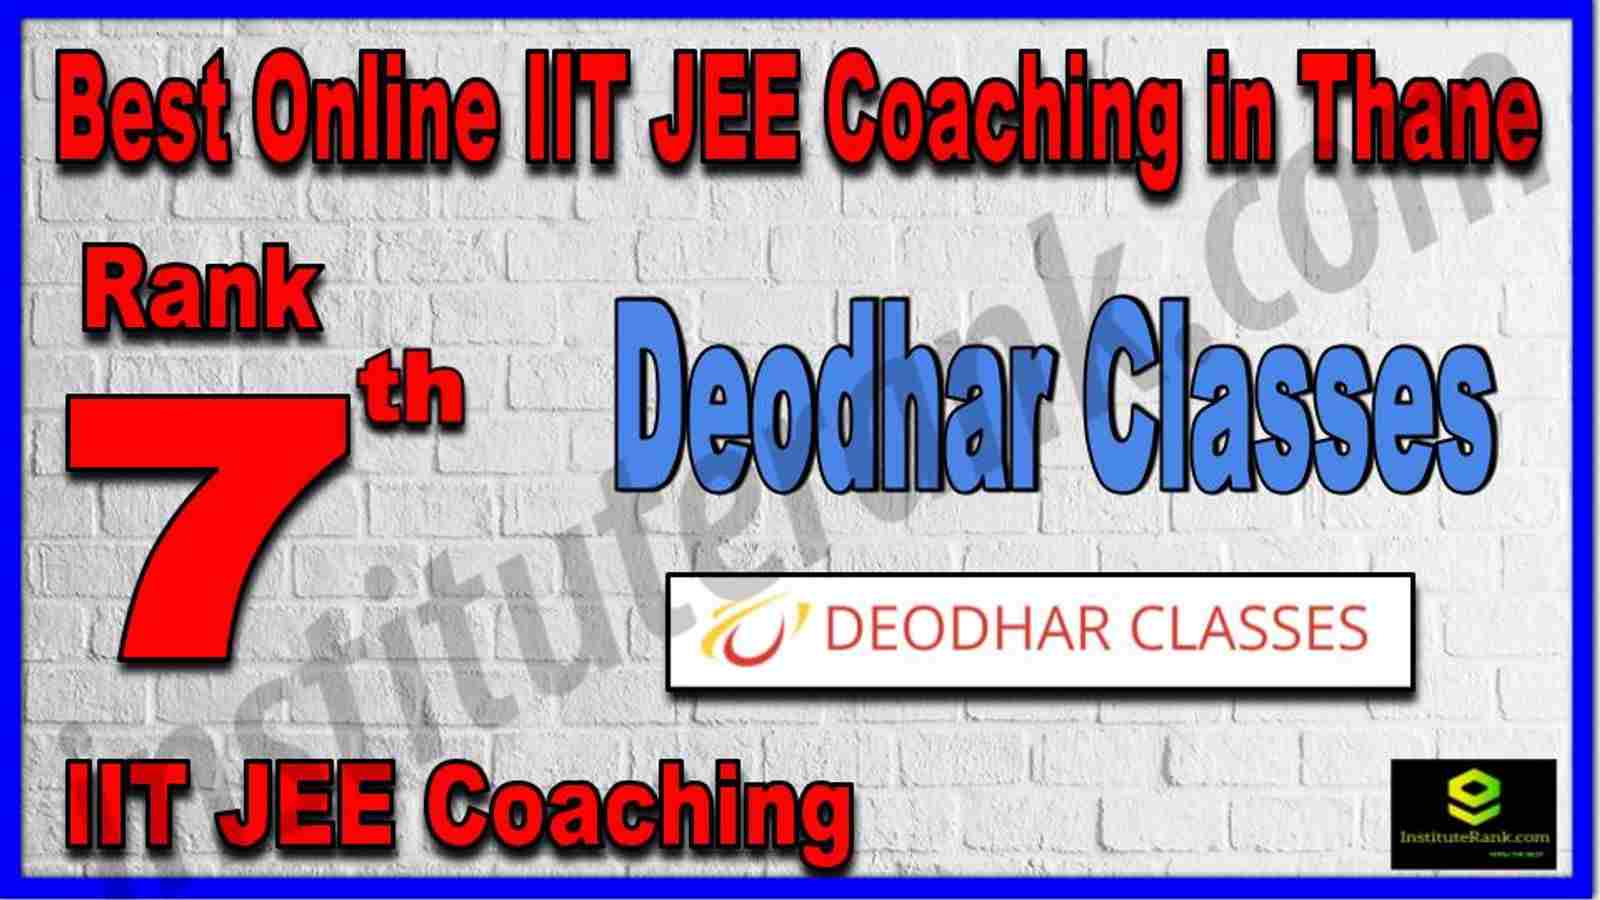 Rank 7th Best Online IIT JEE Coaching in Thane